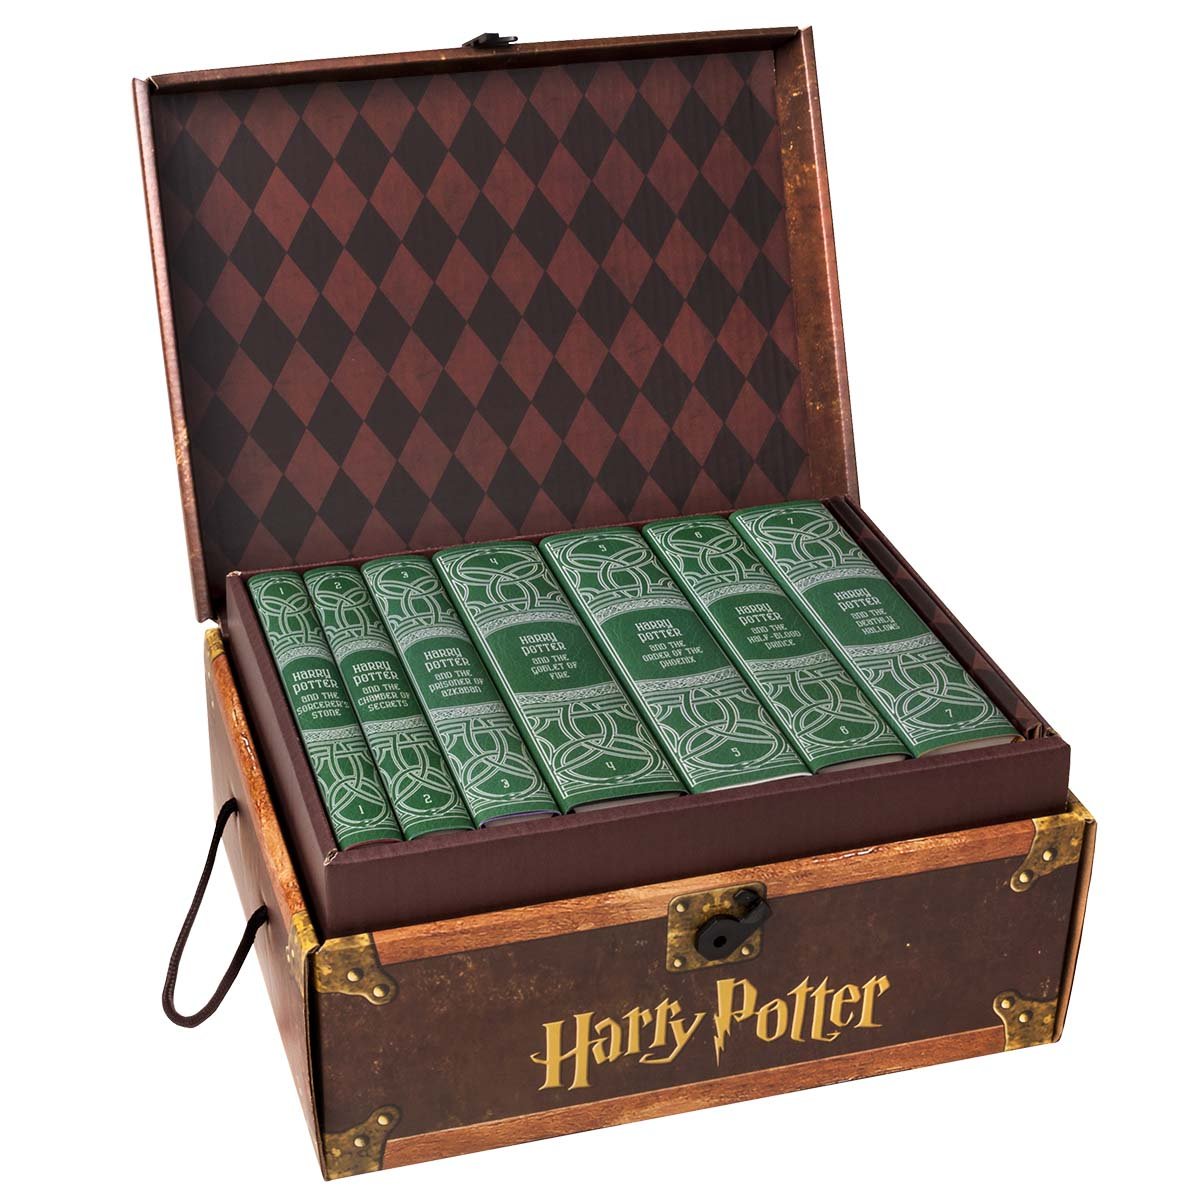 Harry Potter Boxed Set: Slytherin Edition | 7-Volume Hardcover Book Set